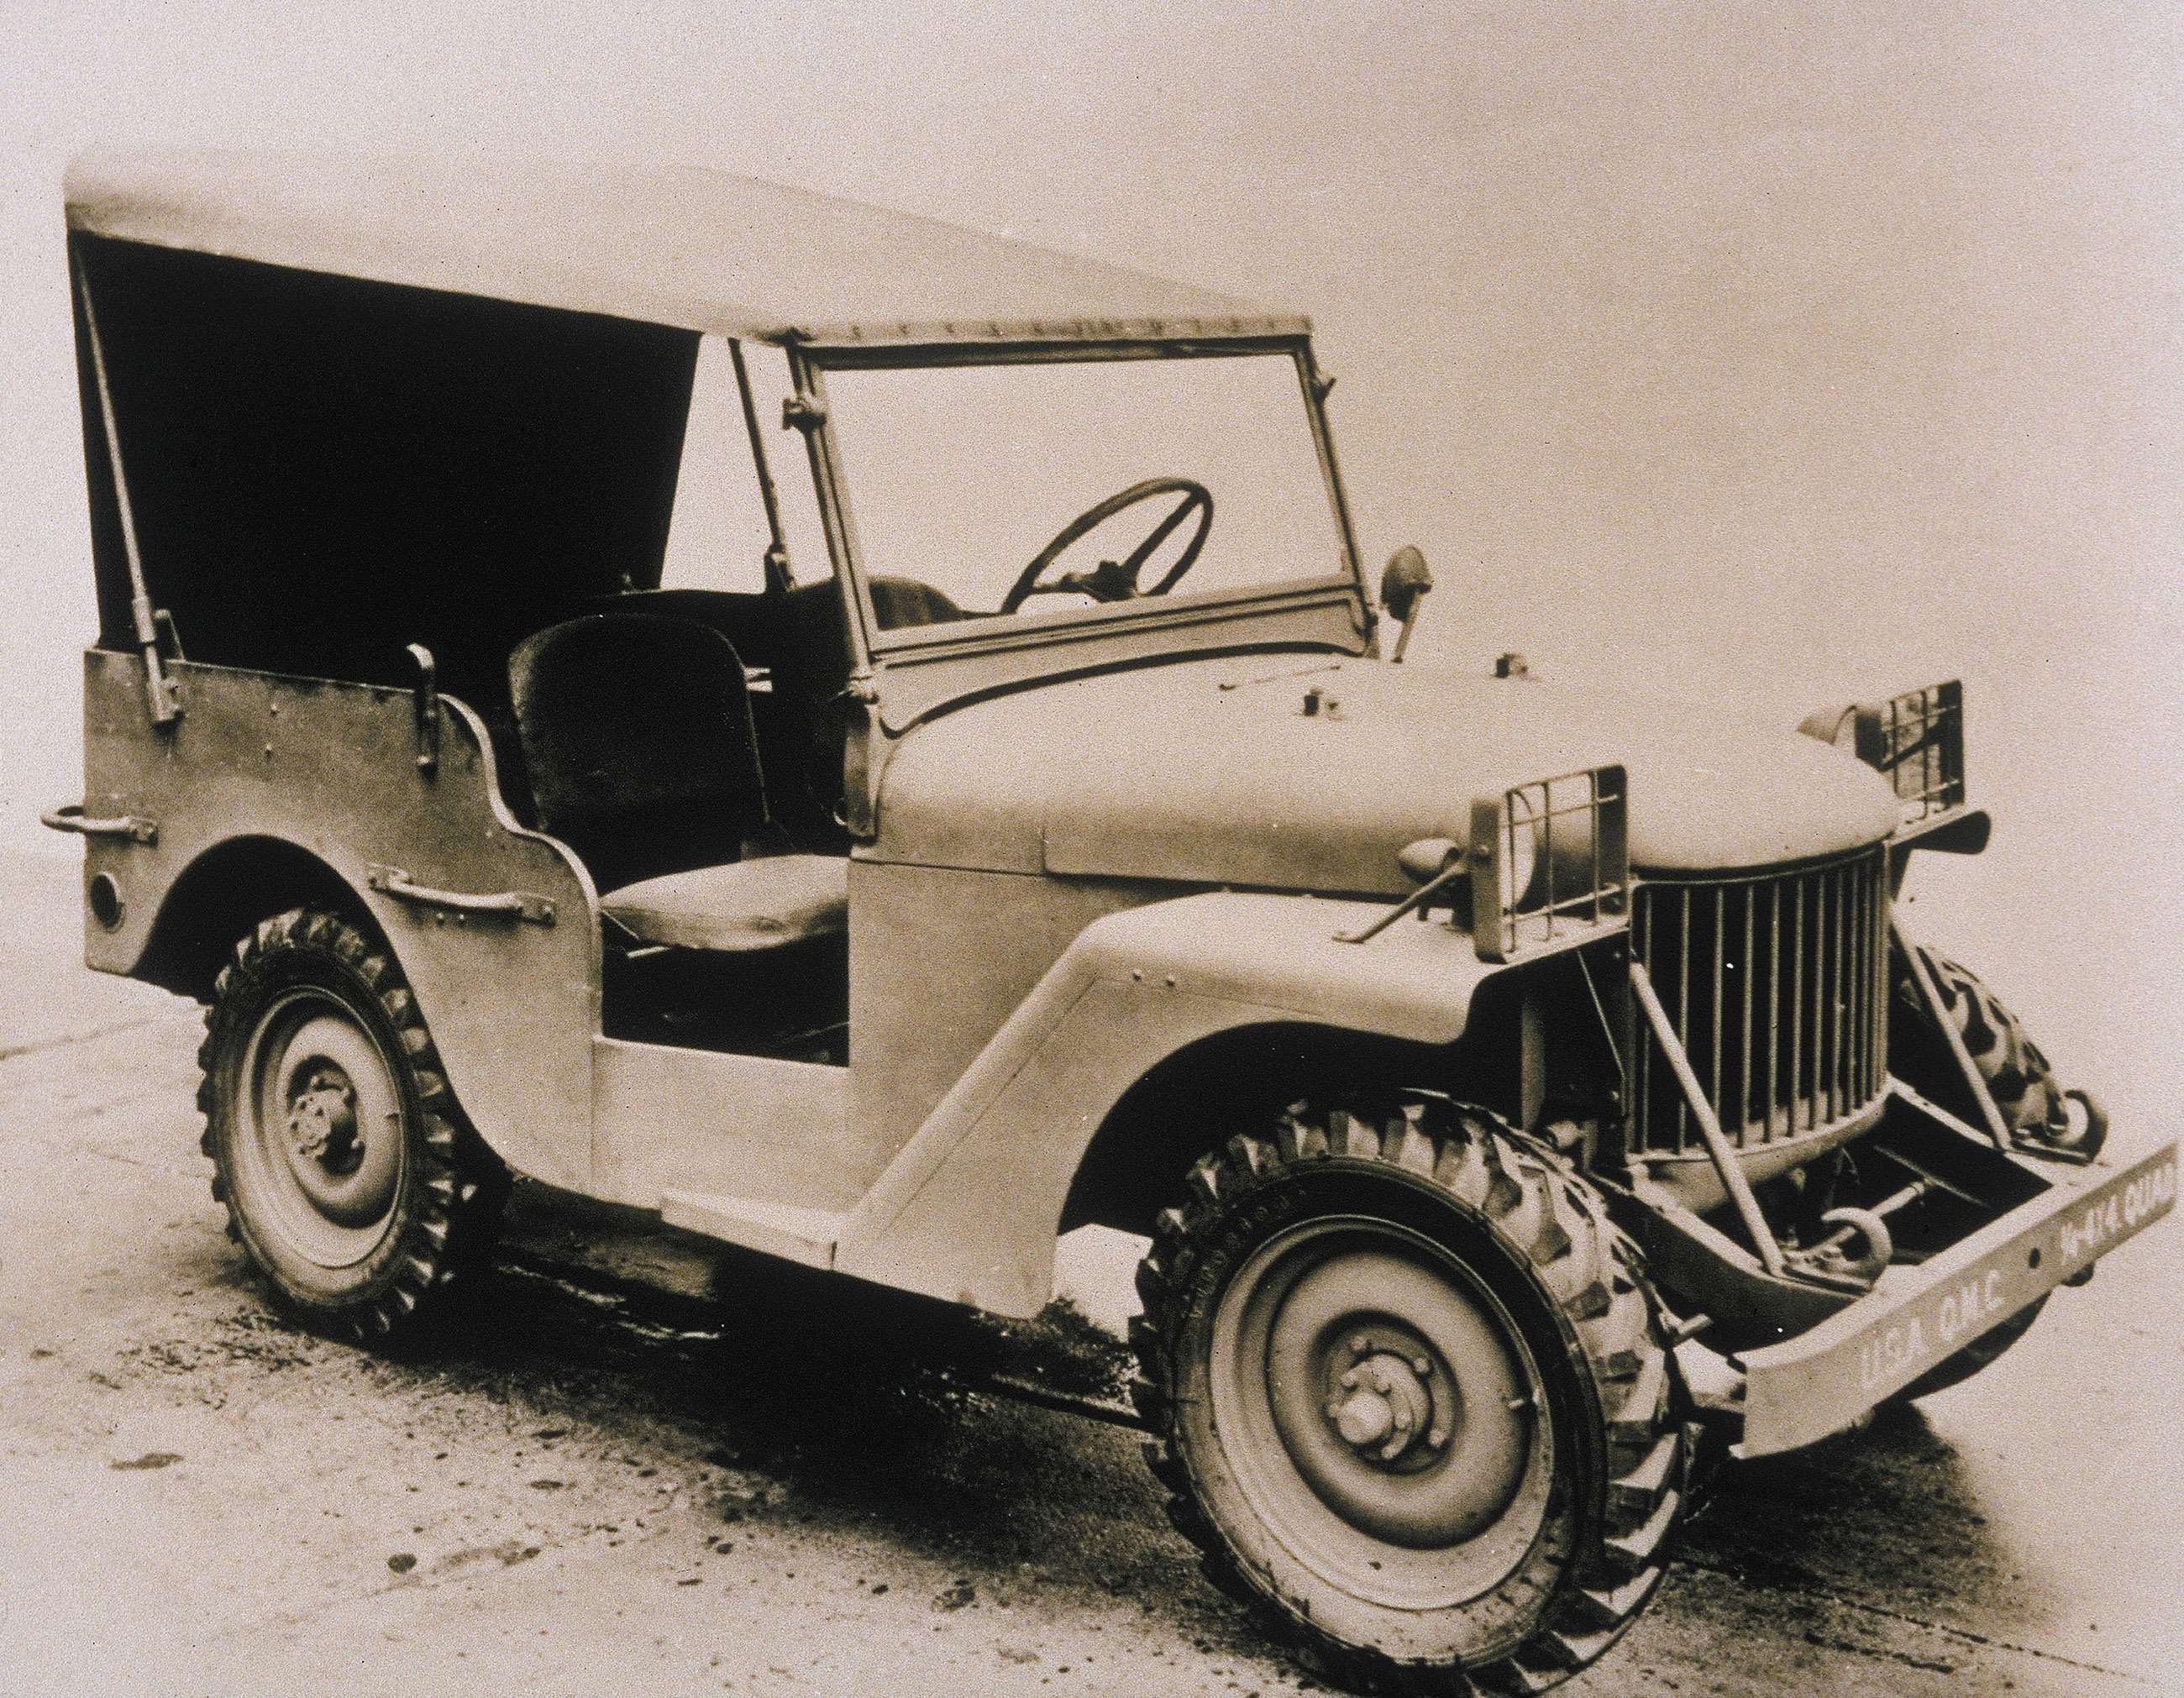 A 1944 Willys Quad.